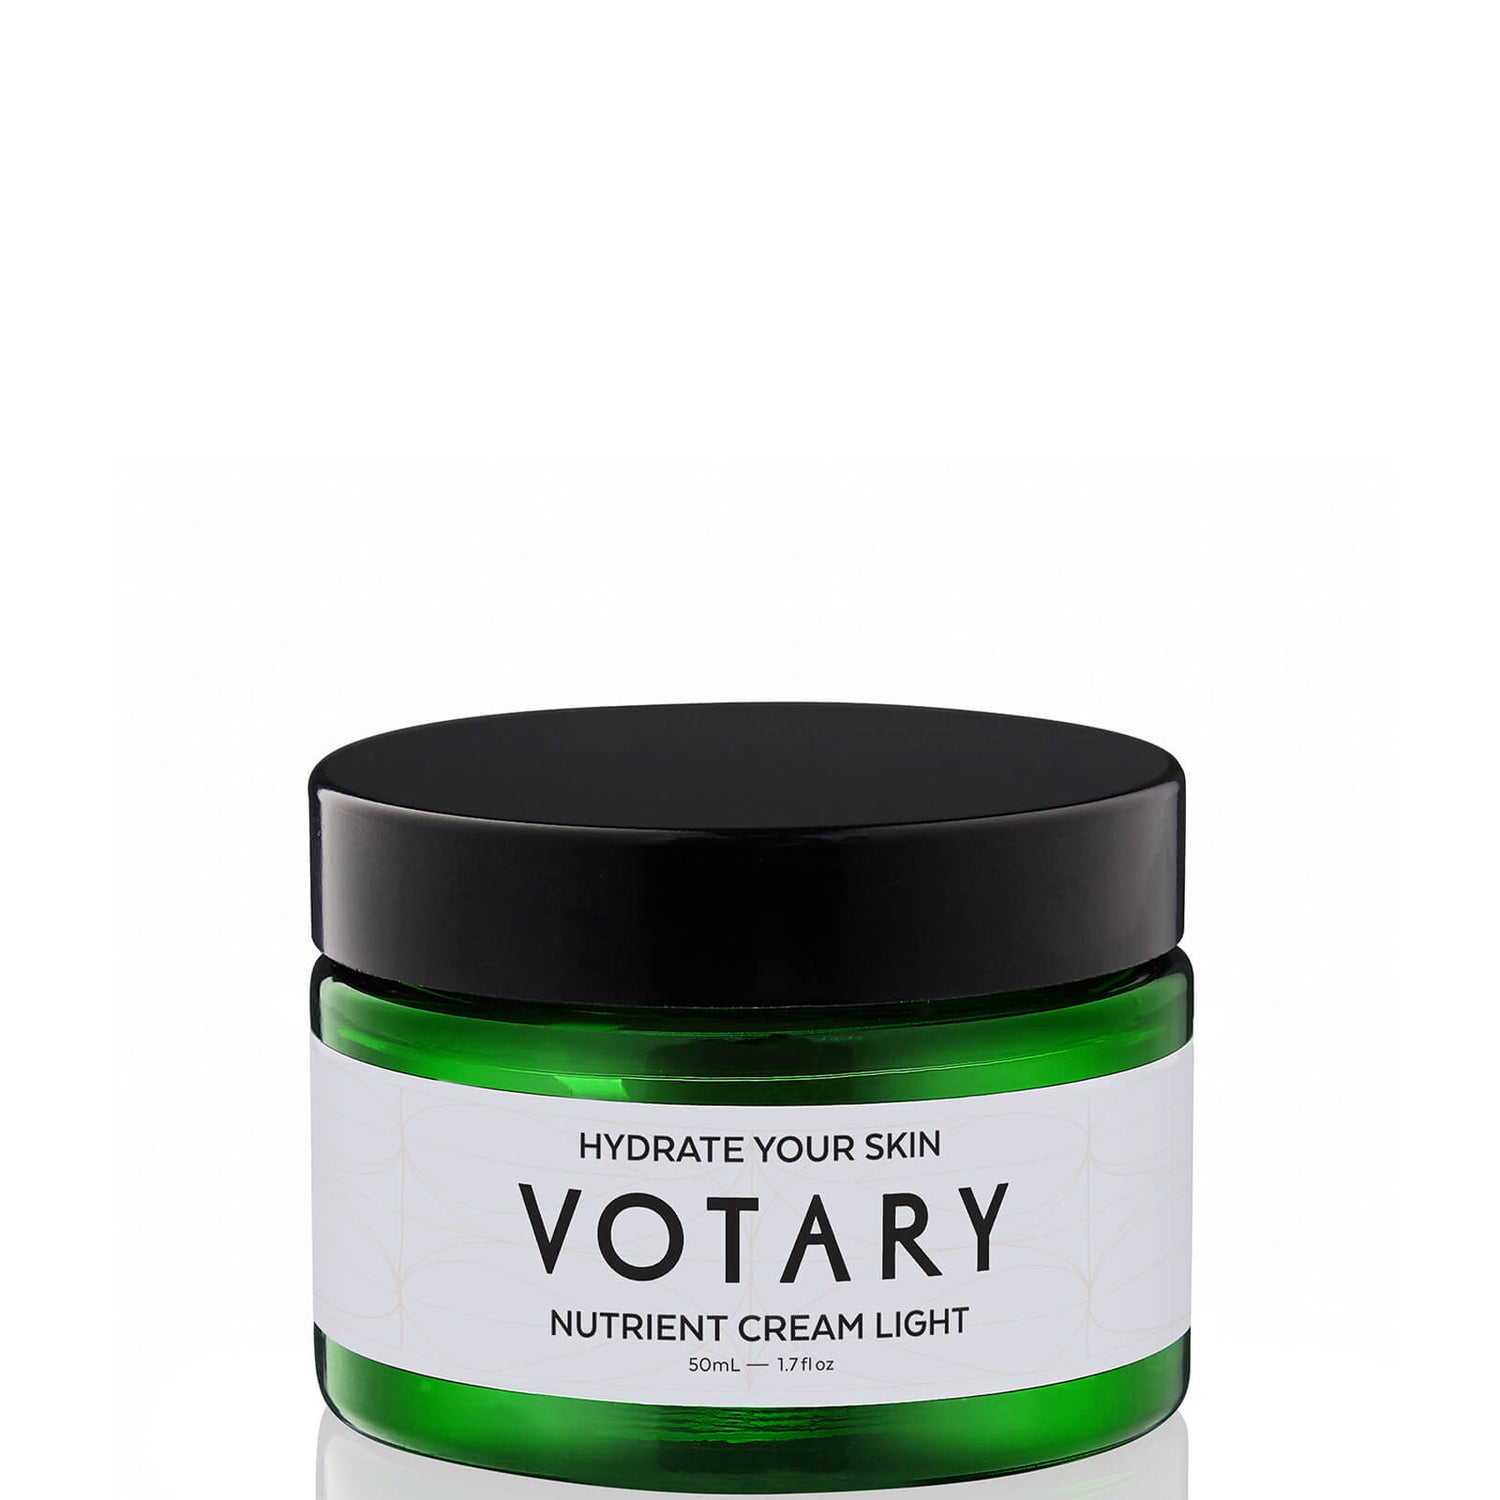 VOTARY Nutrient Cream Light 50ml